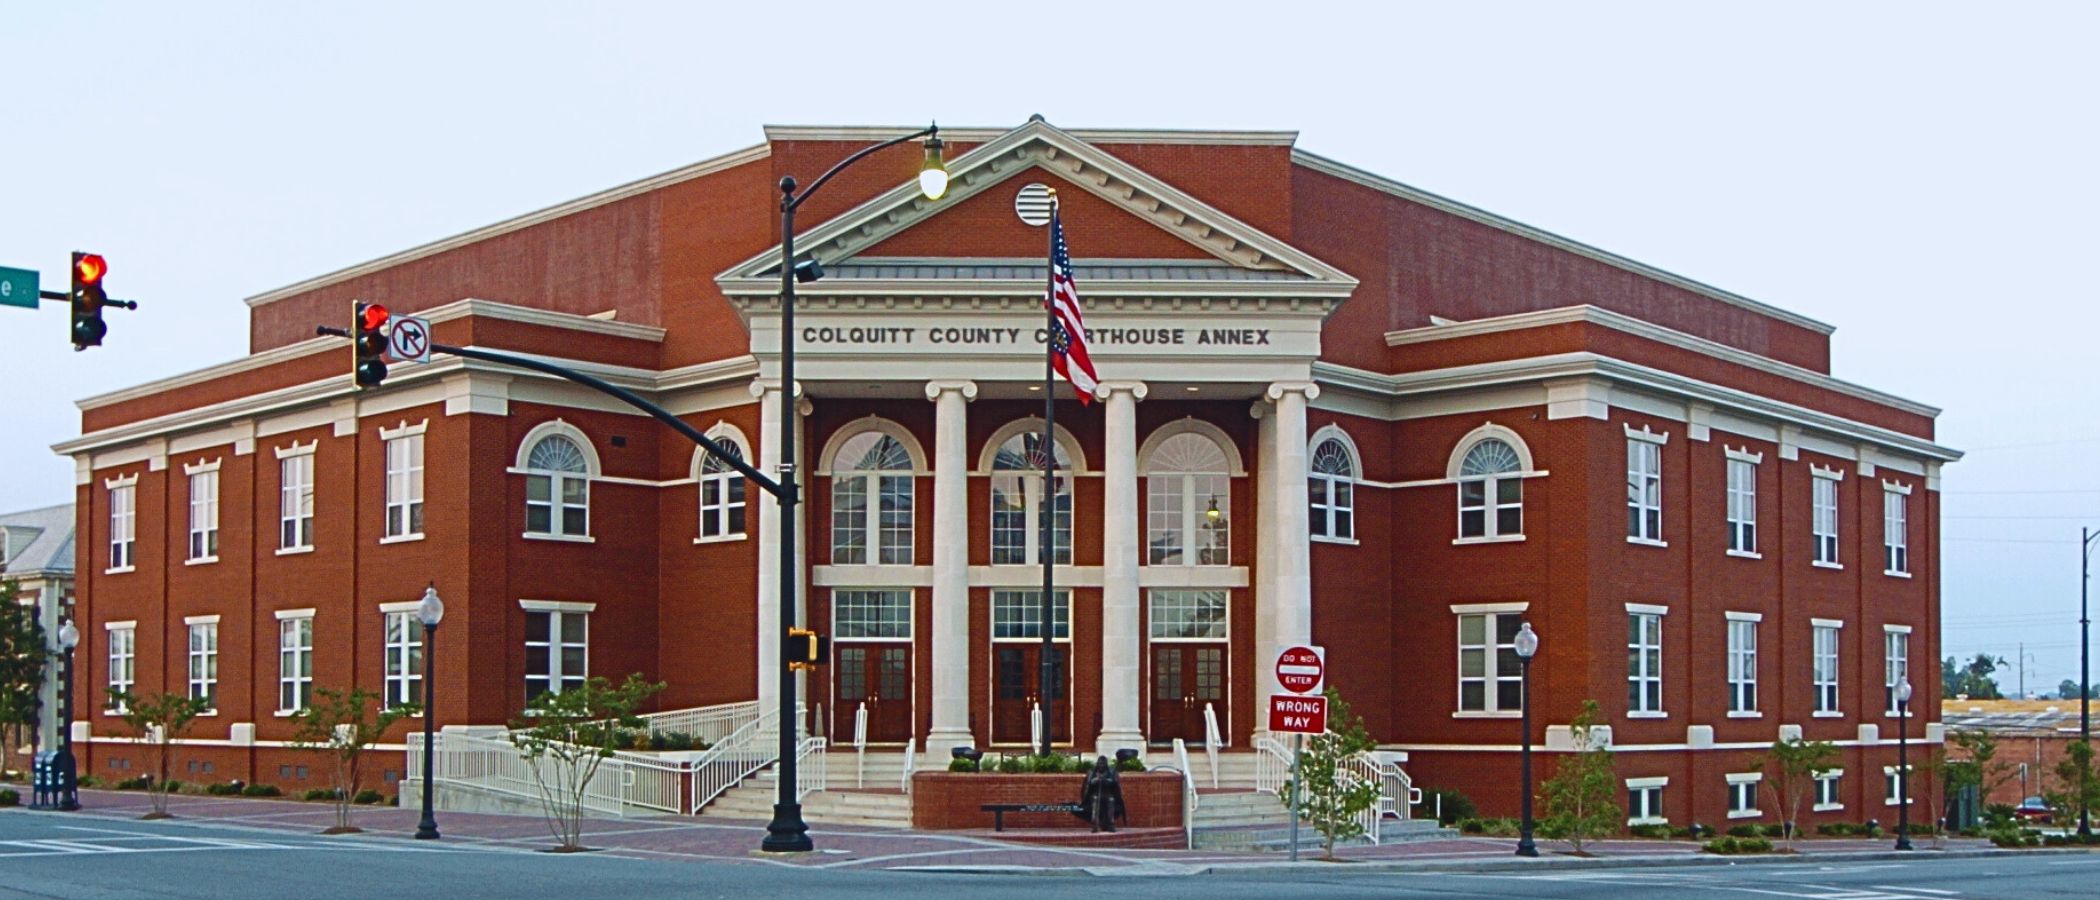 courthouse annex